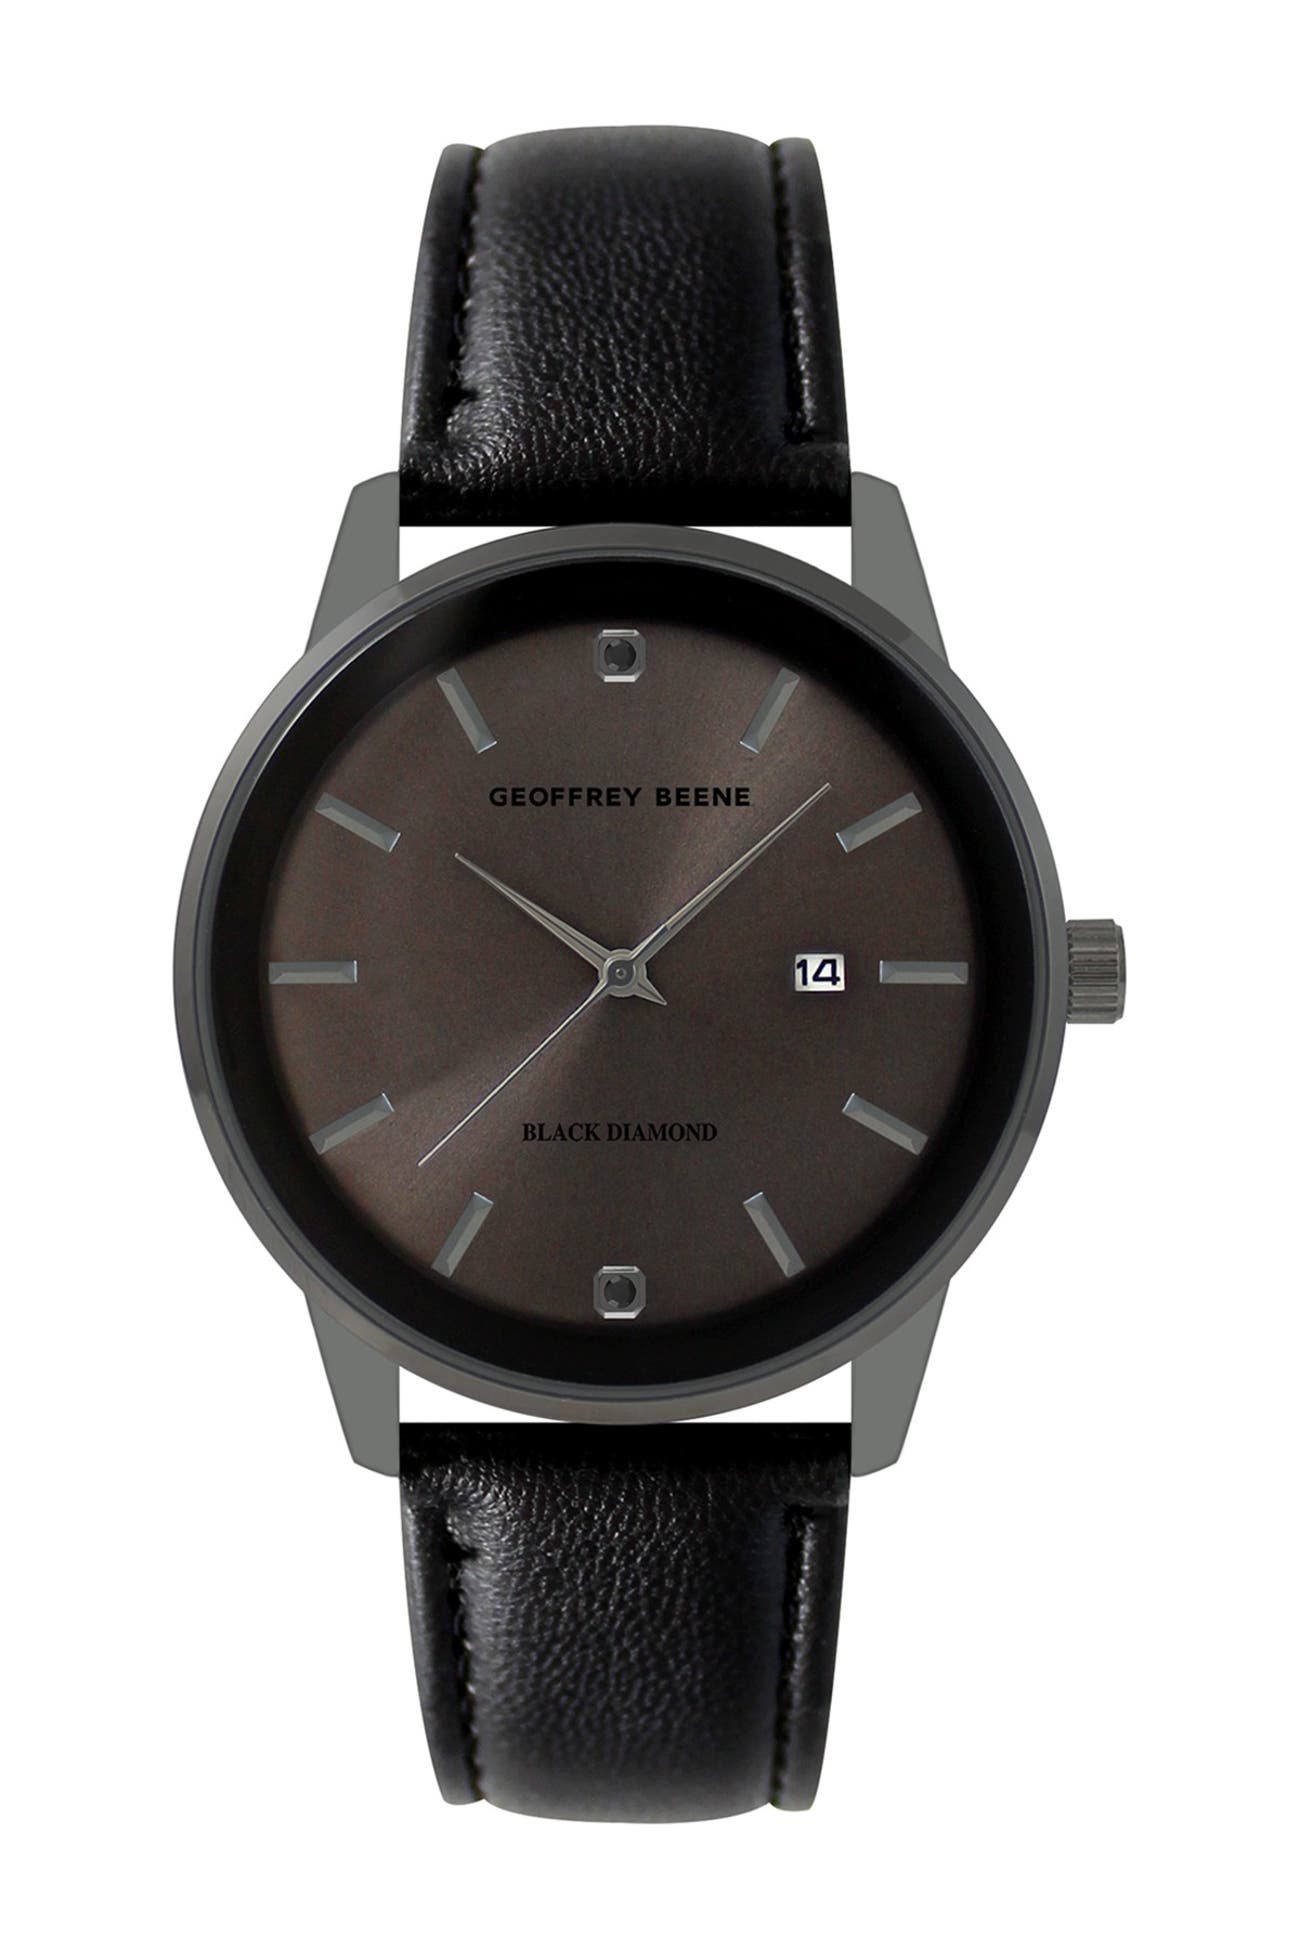 Geoffrey Beene | Men's Black Diamond Leather Strap Watch, 40mm - 0.02 ...